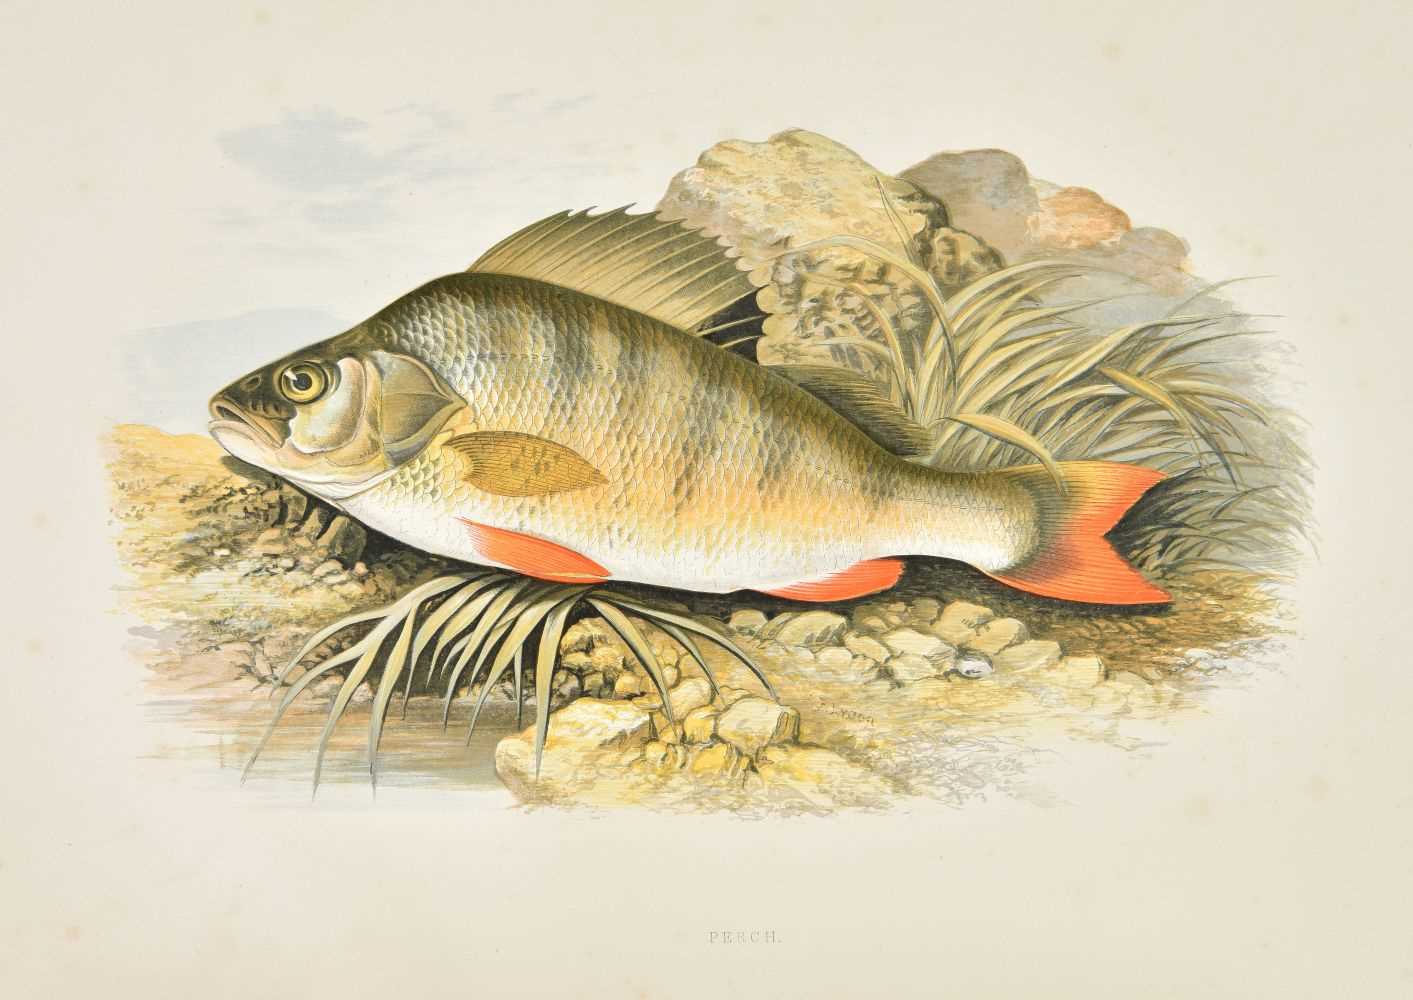 Lot 70 - Houghton (Rev. W.). British Fresh-Water Fishes, 1879